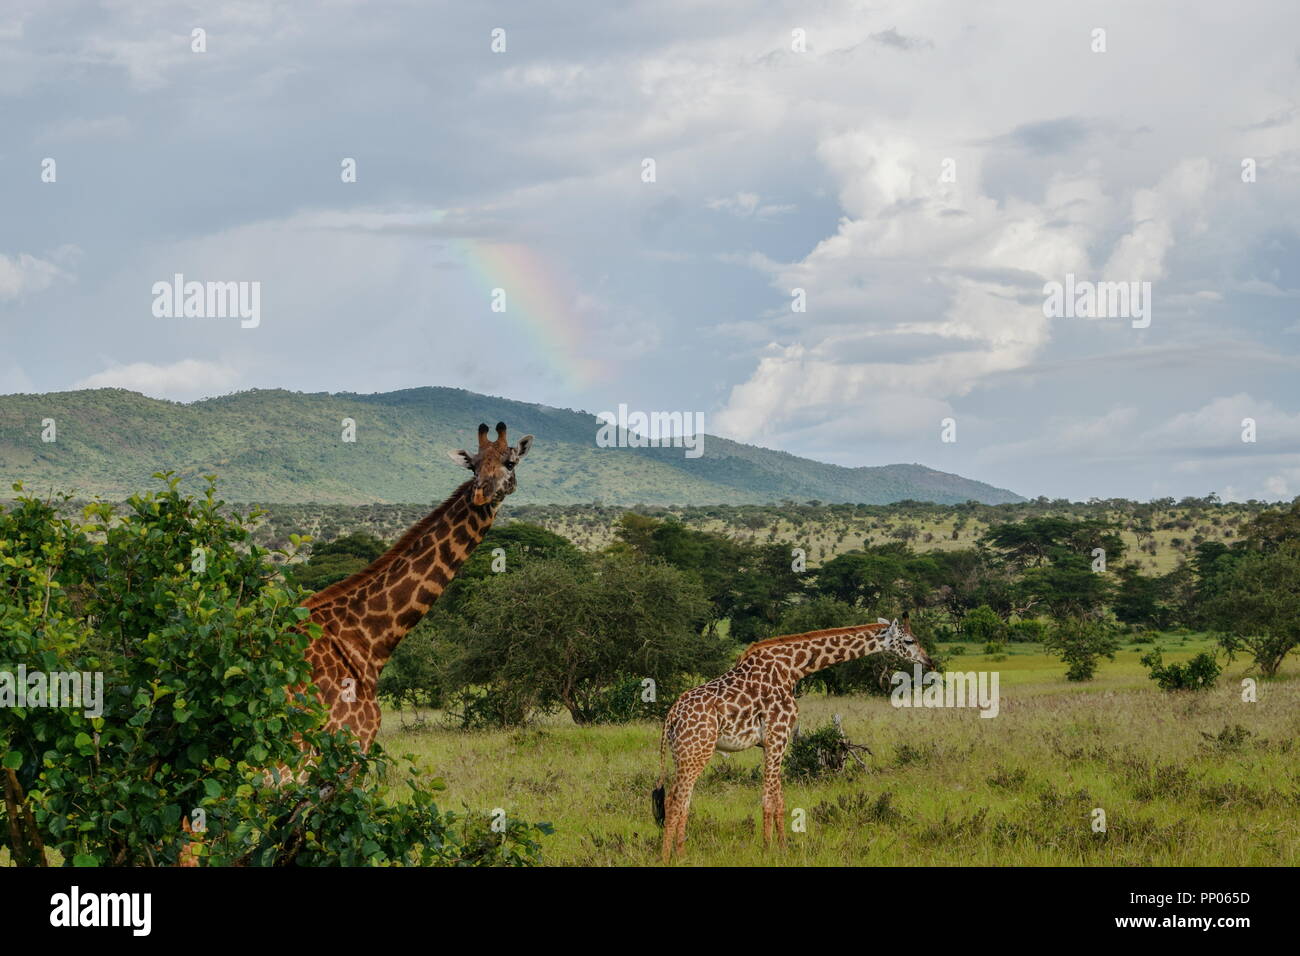 A herd of giraffes at Taita Hills Wildlife Sanctuary,Kenya Stock Photo